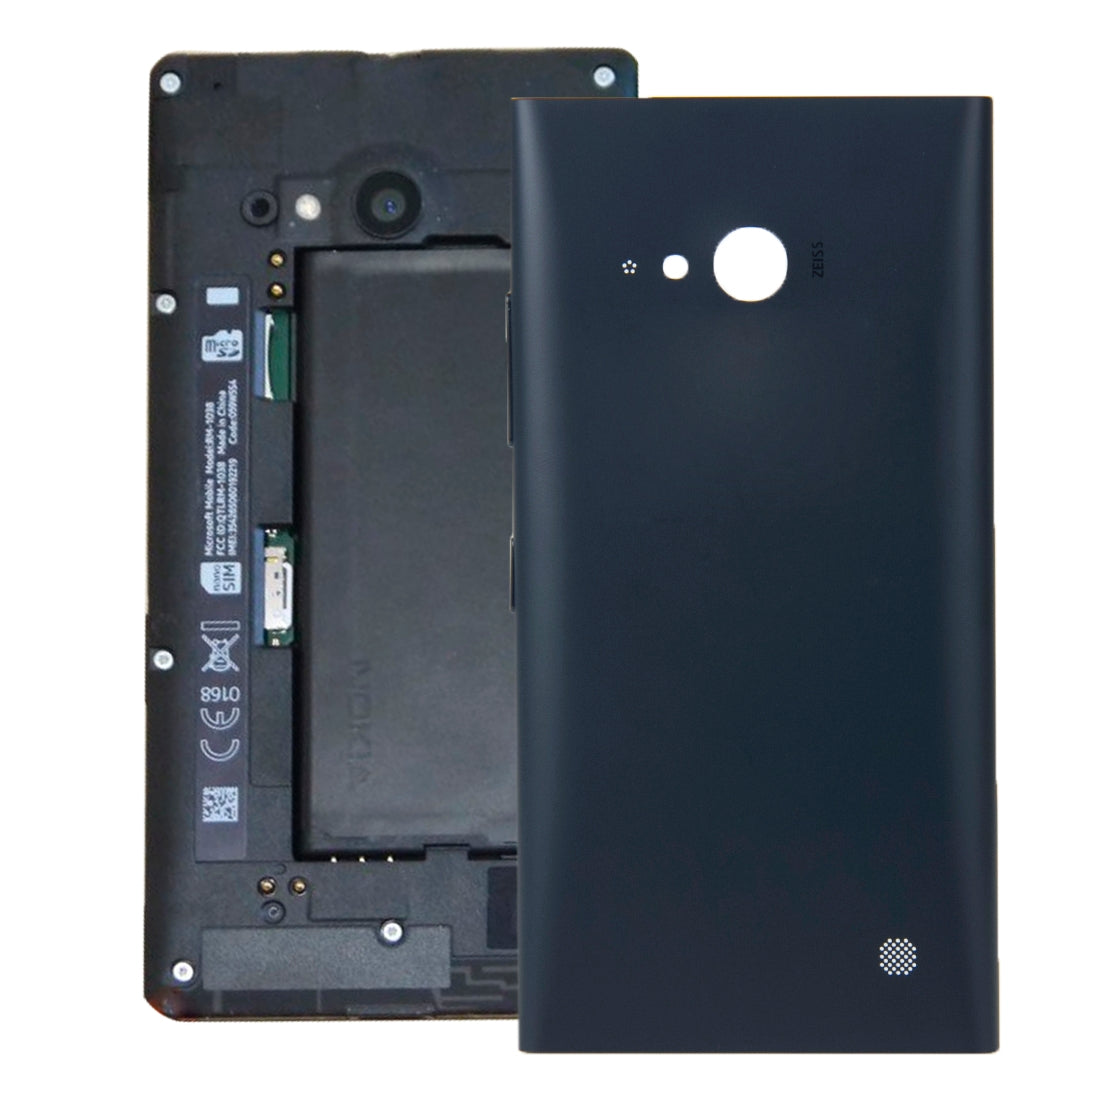 Battery Cover Back Cover Nokia Lumia 735 Black